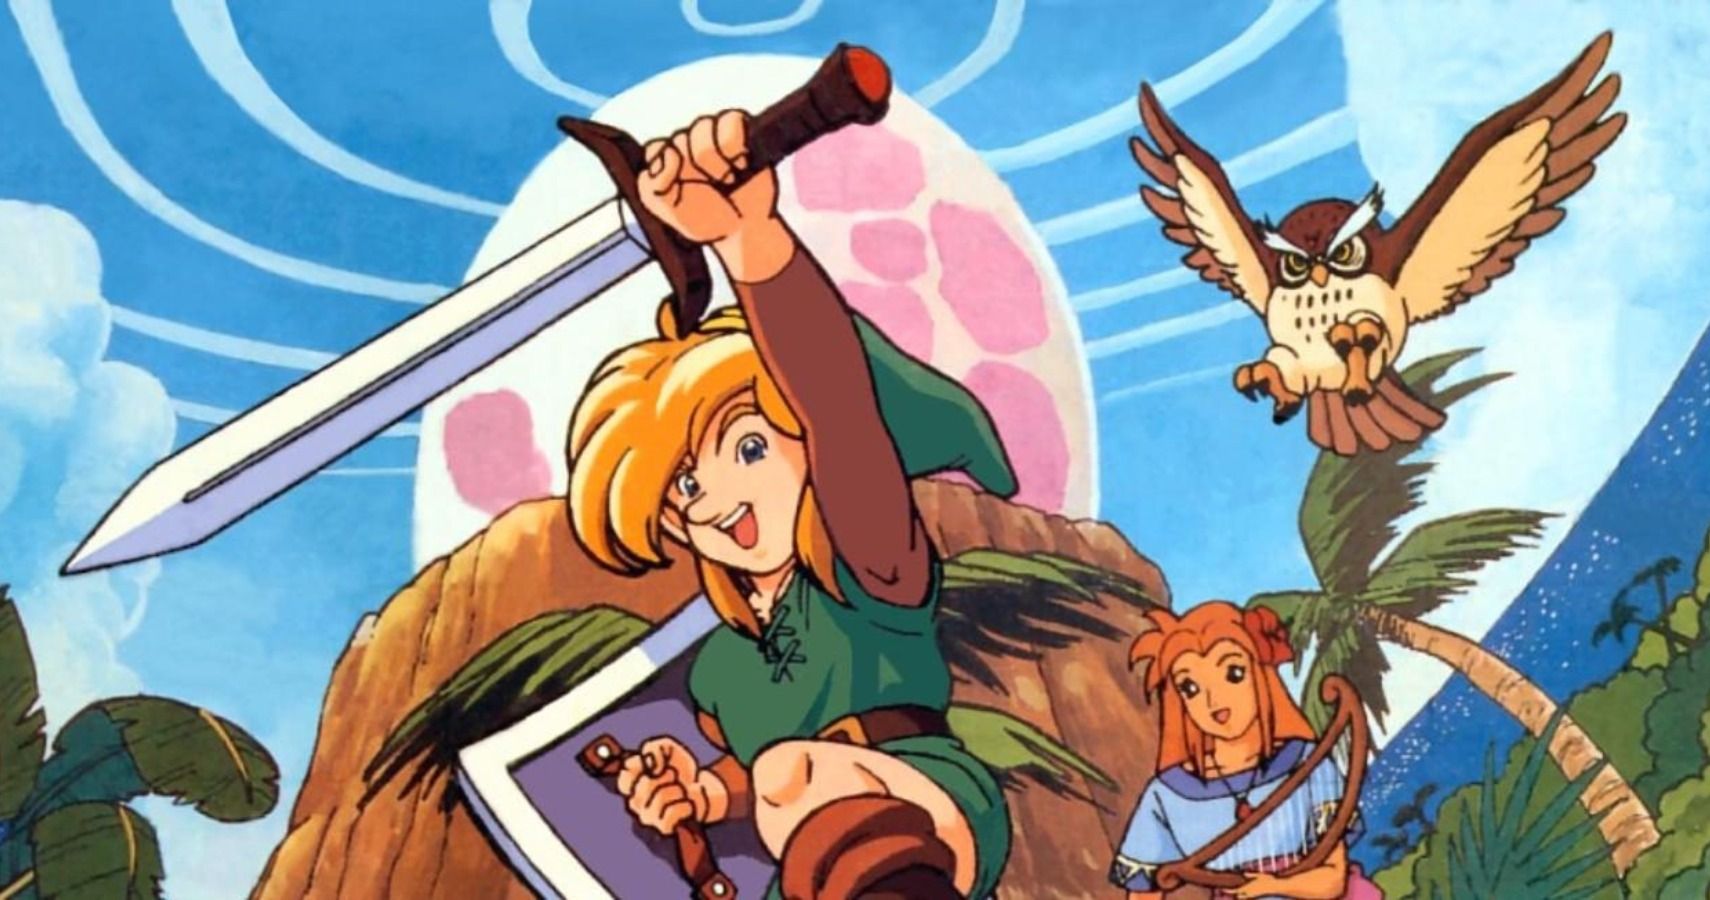 Link os. Link's Awakening 1993. Зельда link's Awakening. Zelda 1993. The Legend of Zelda: link's Awakening.